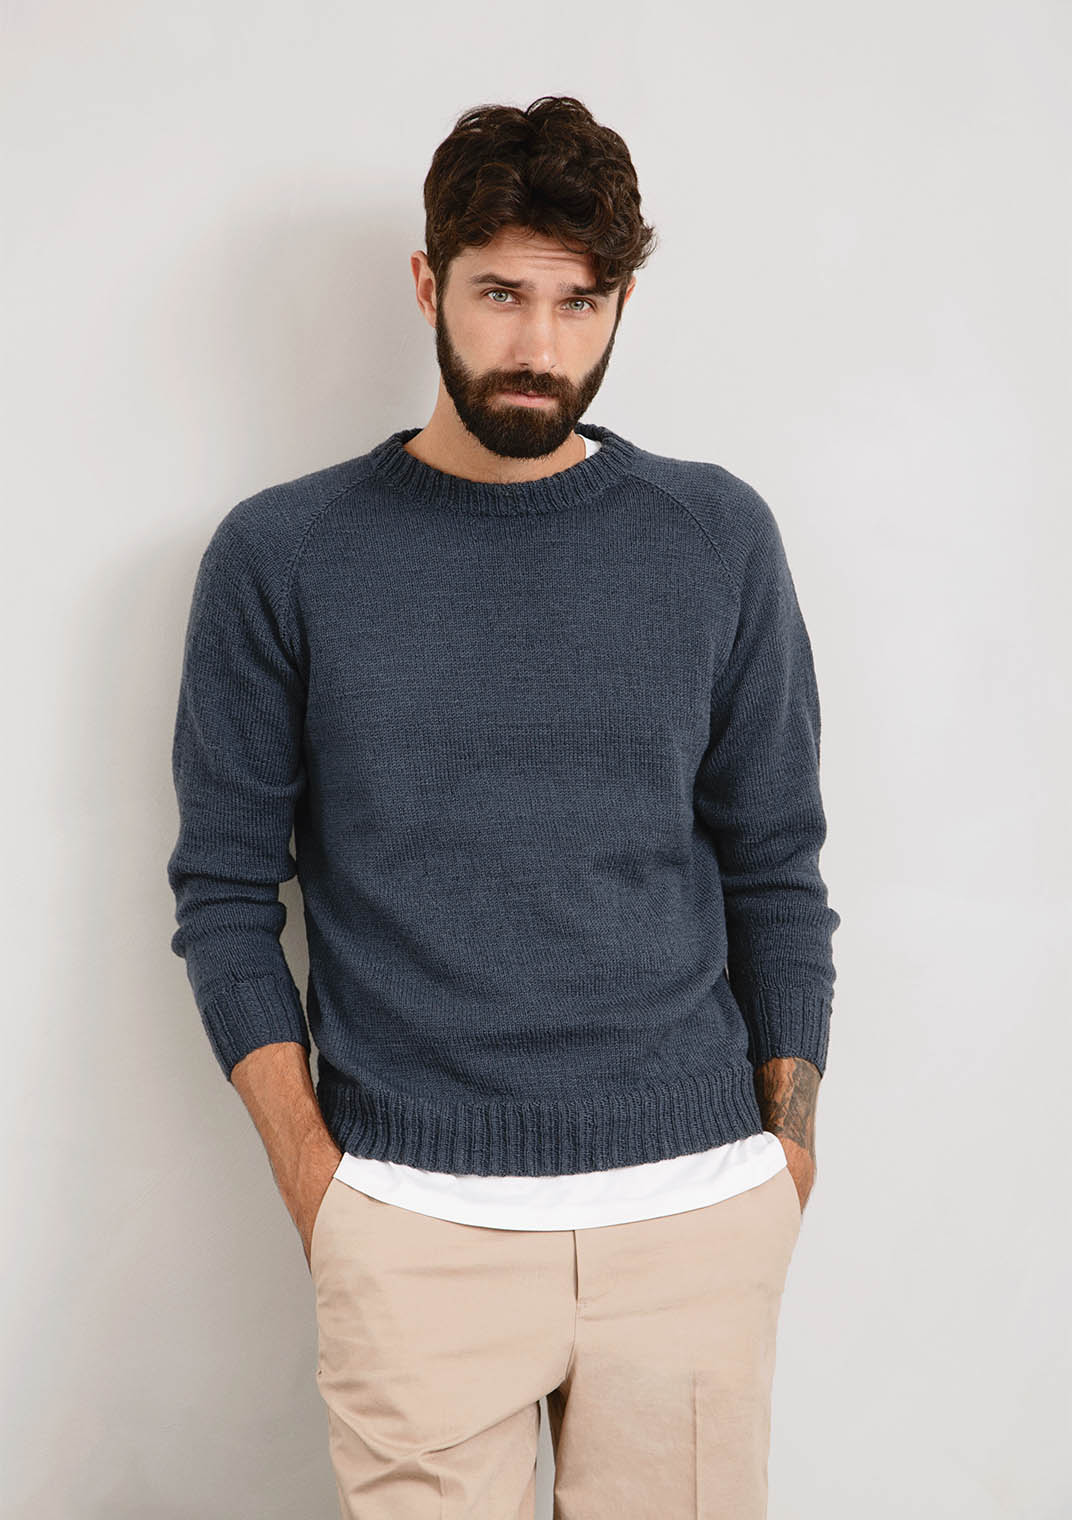 MR Casual Sweater